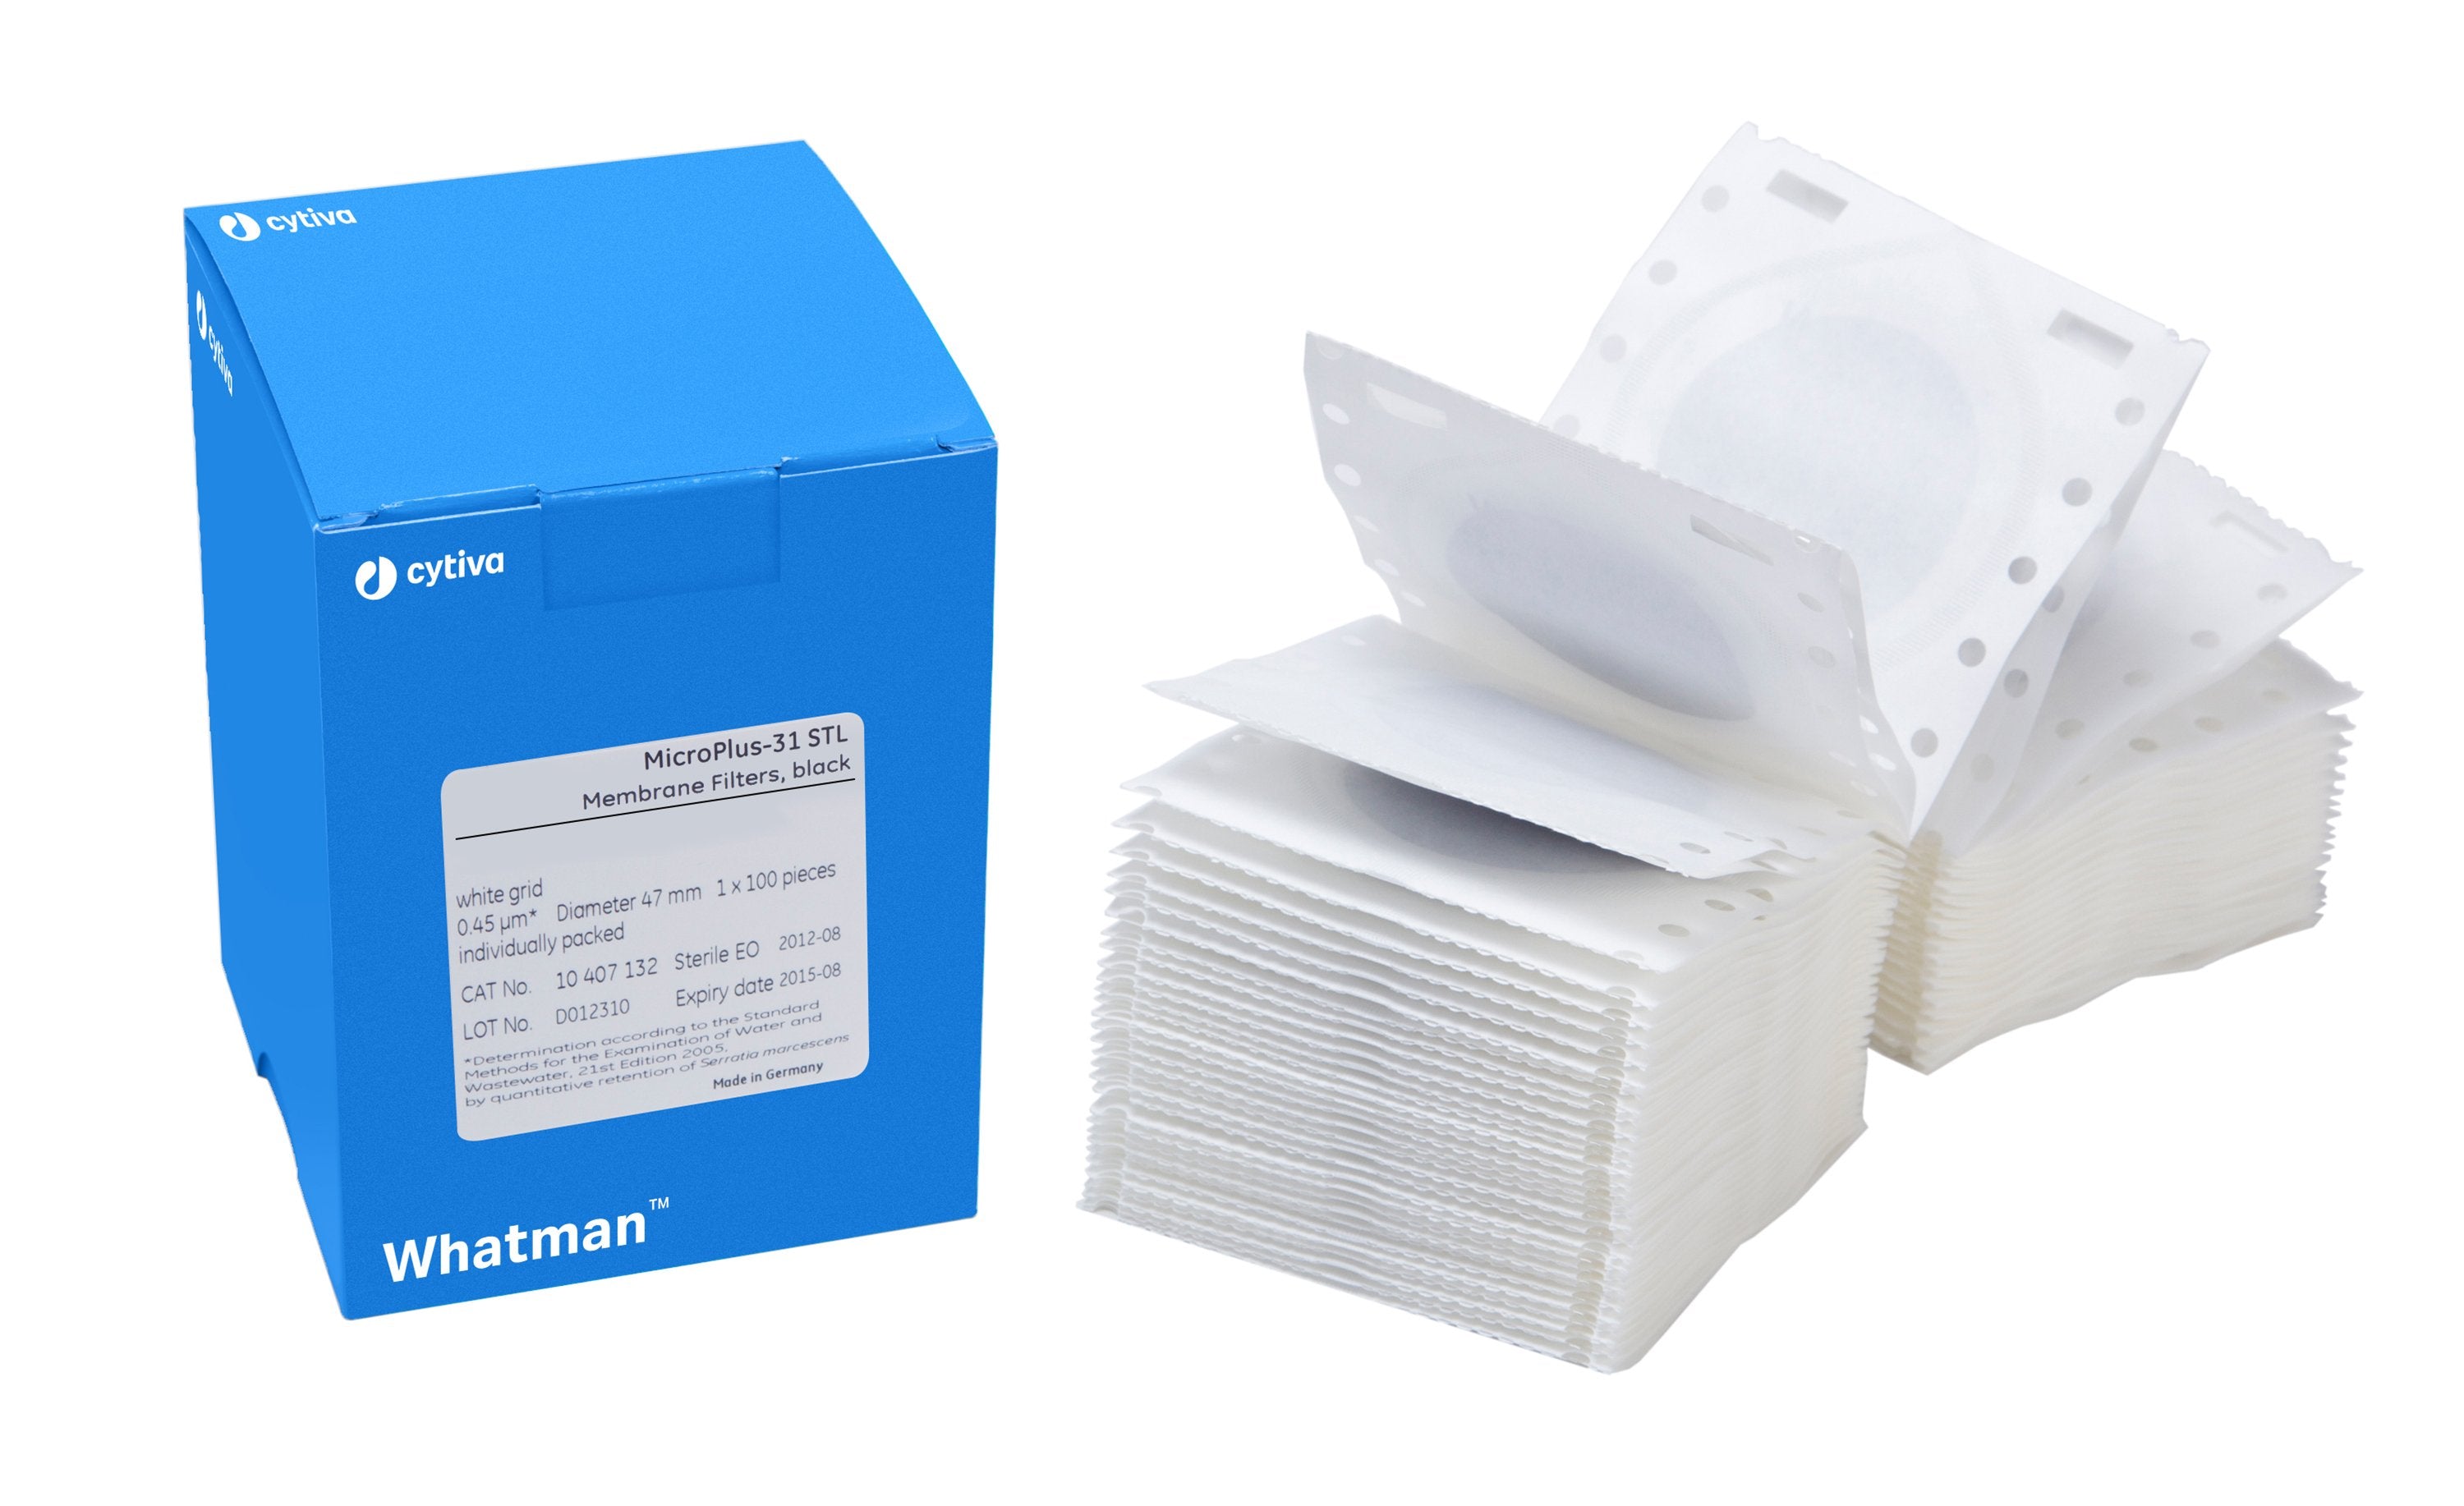 Whatman 10407132 MicroPlus-31, 47mm Dia, Black, White Grid, Sterile For Use with Whatman Membrane-Butler, 100/pk, 4 pk/bx (PN: 10407132)